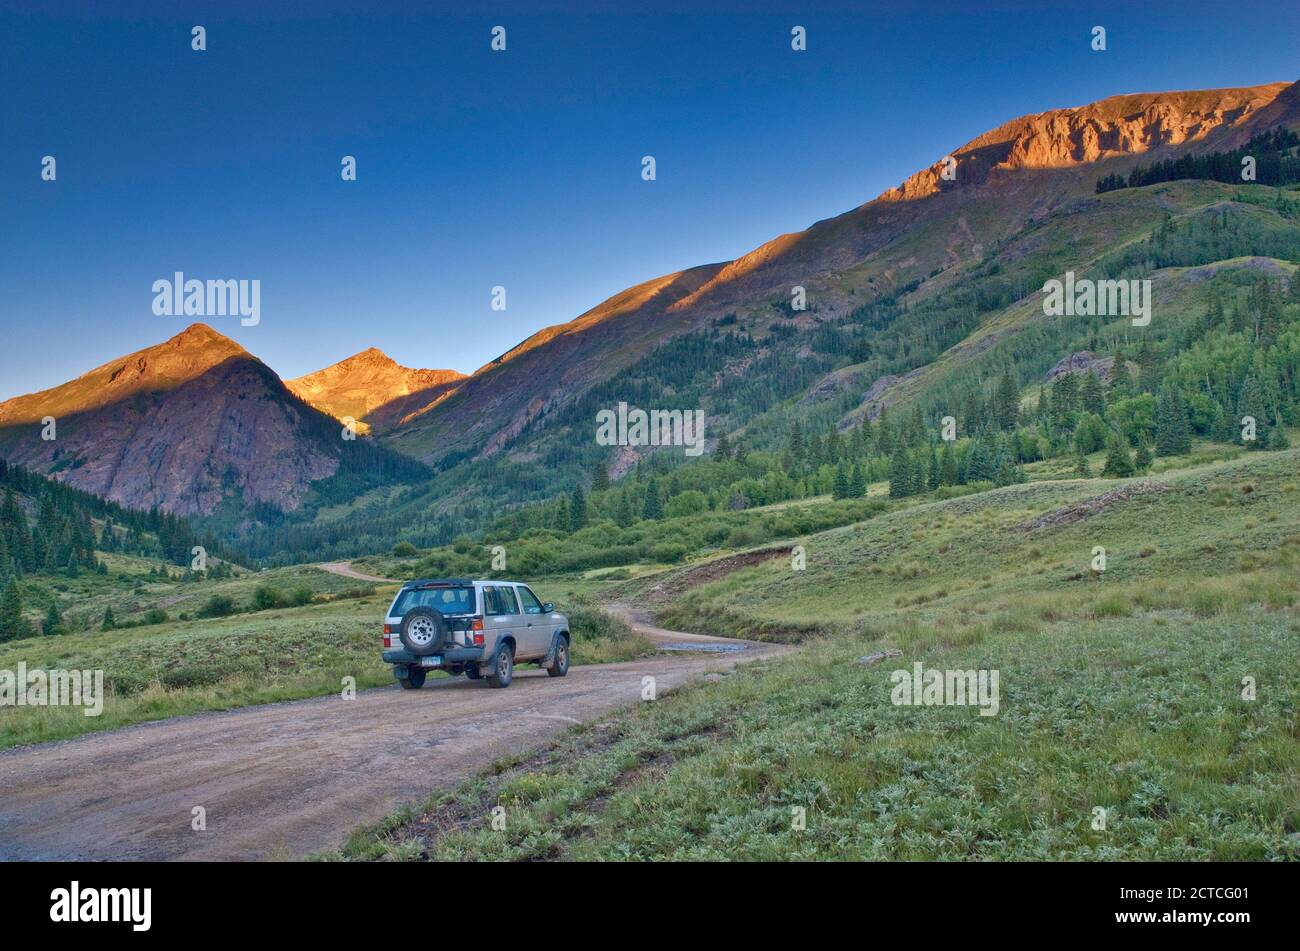 4WD vehicle on Alpine Loop near Cinnamon Pass, Cinnamon Mtn in distance, sunrise, San Juan Mountains, Colorado, USA Stock Photo